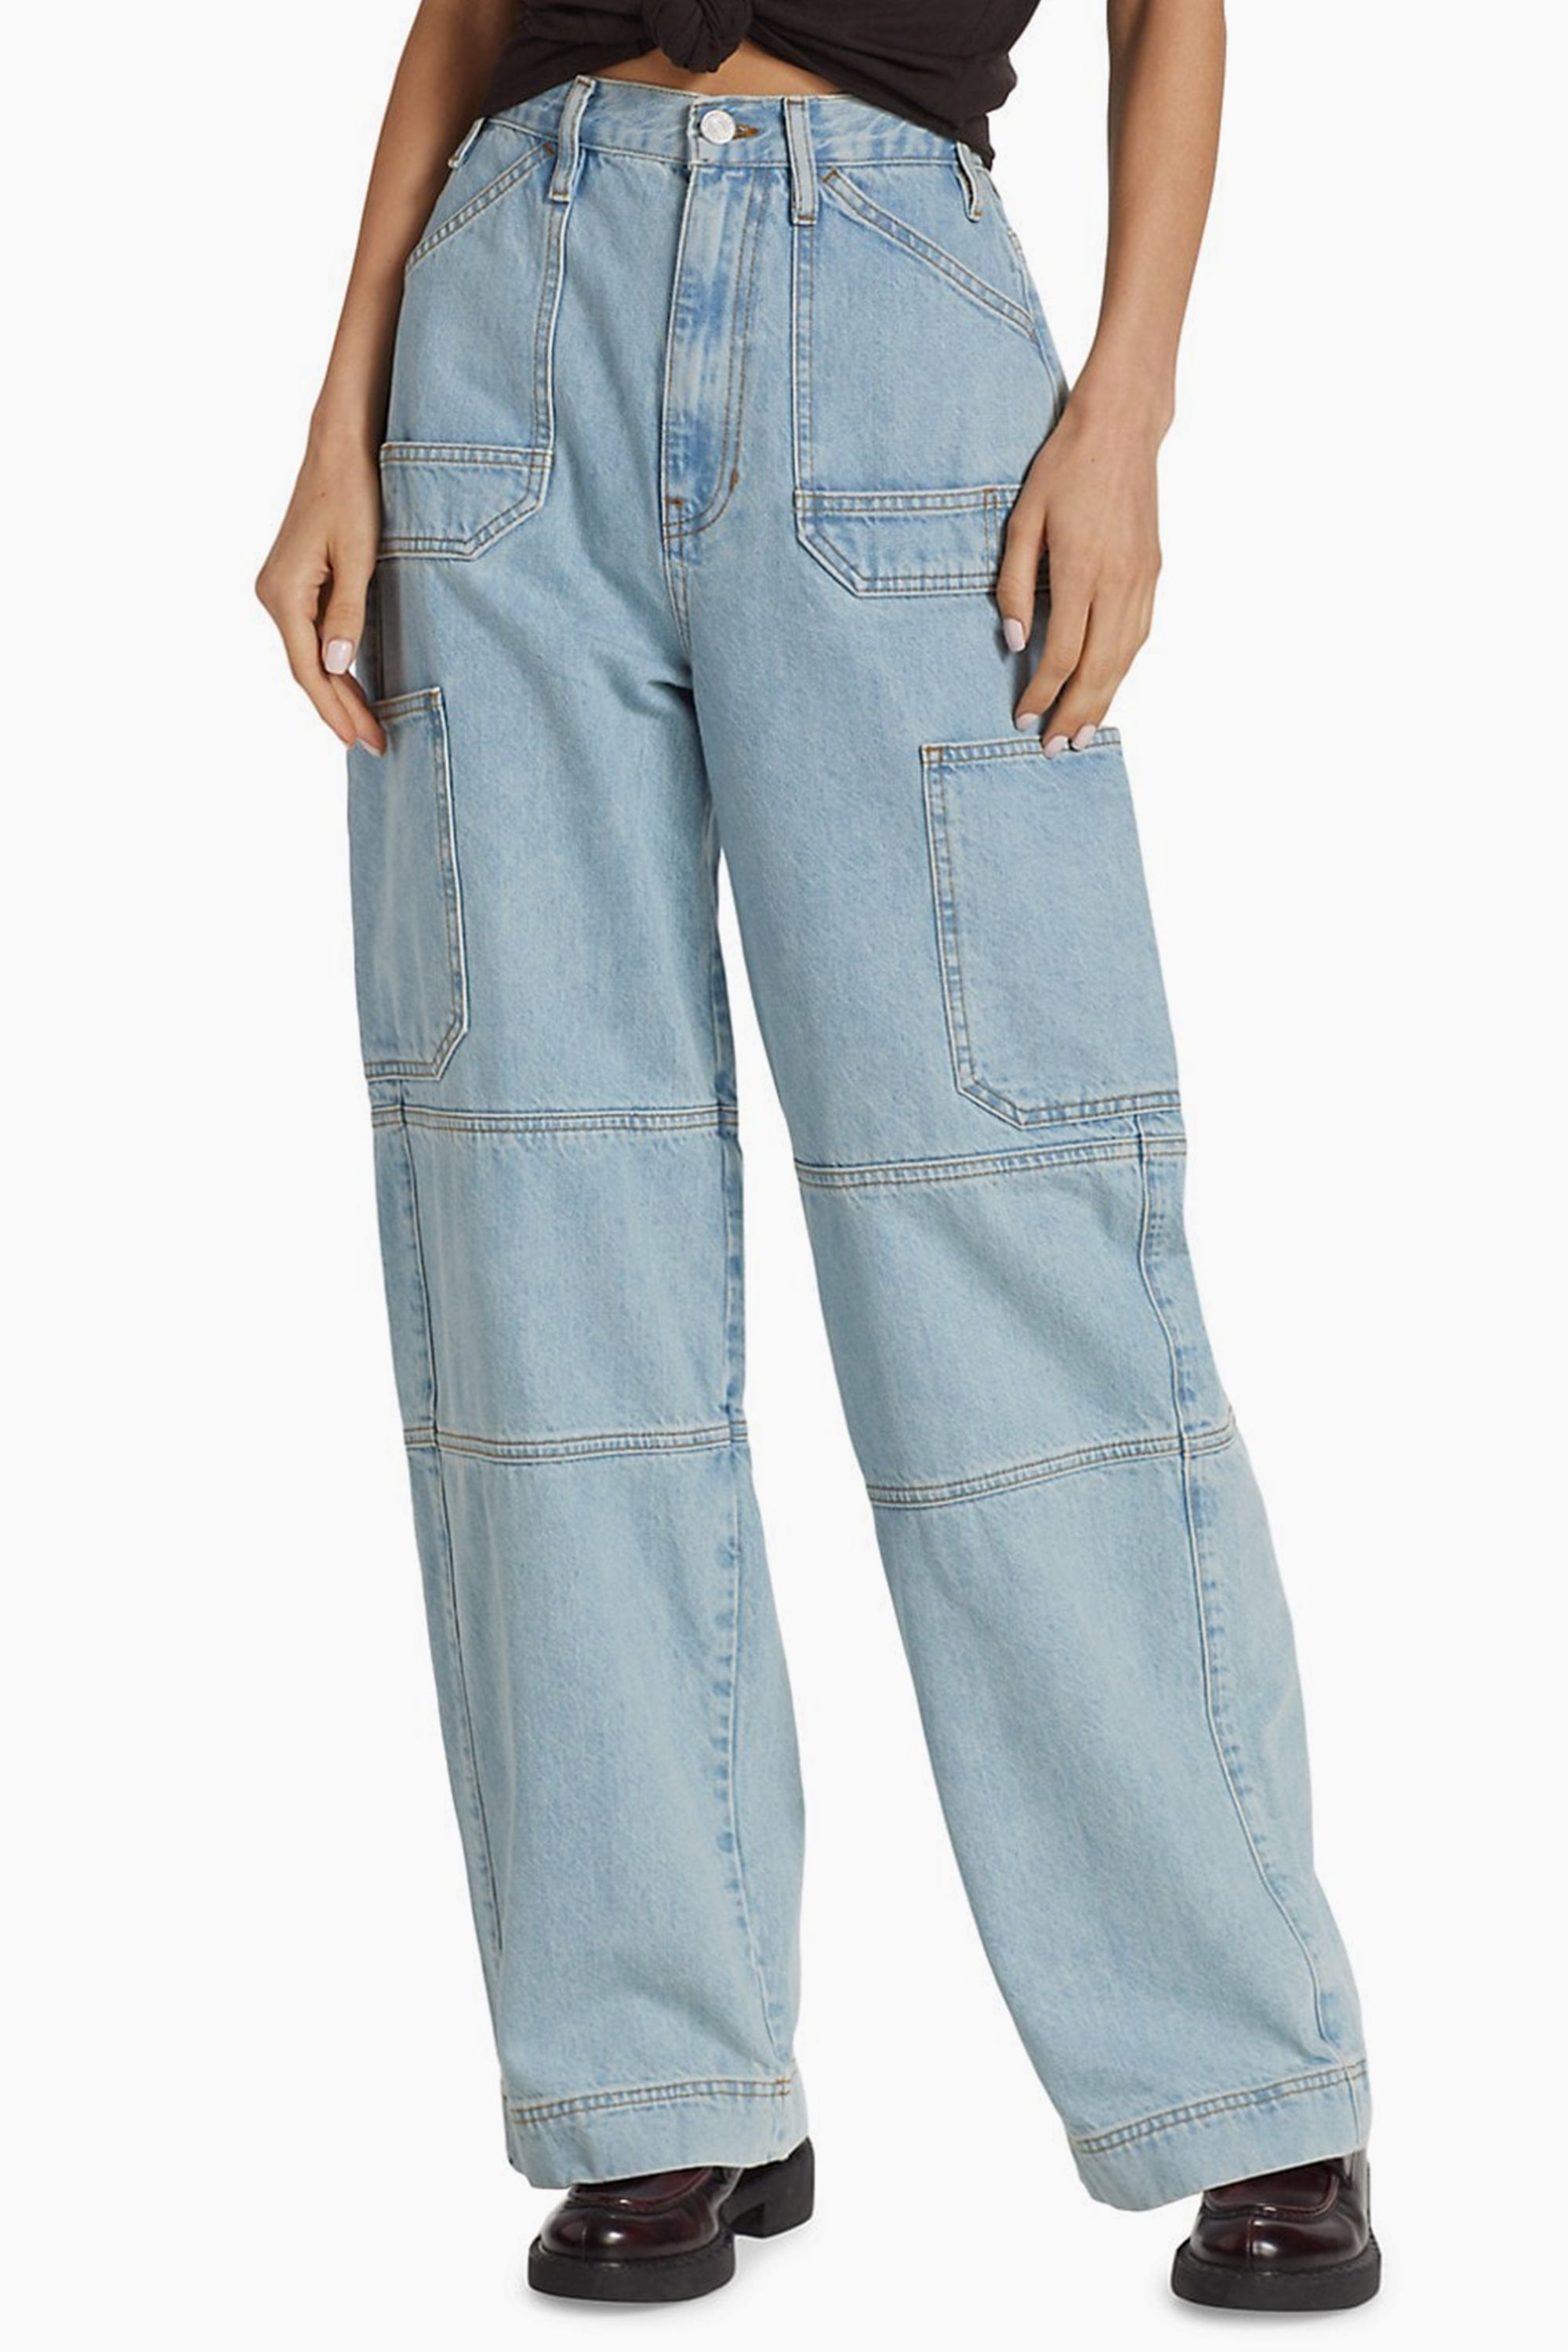 Men Cargo Pants Trousers Straight Bottoms Multi Pockets Outdoor Work  Fishing  eBay